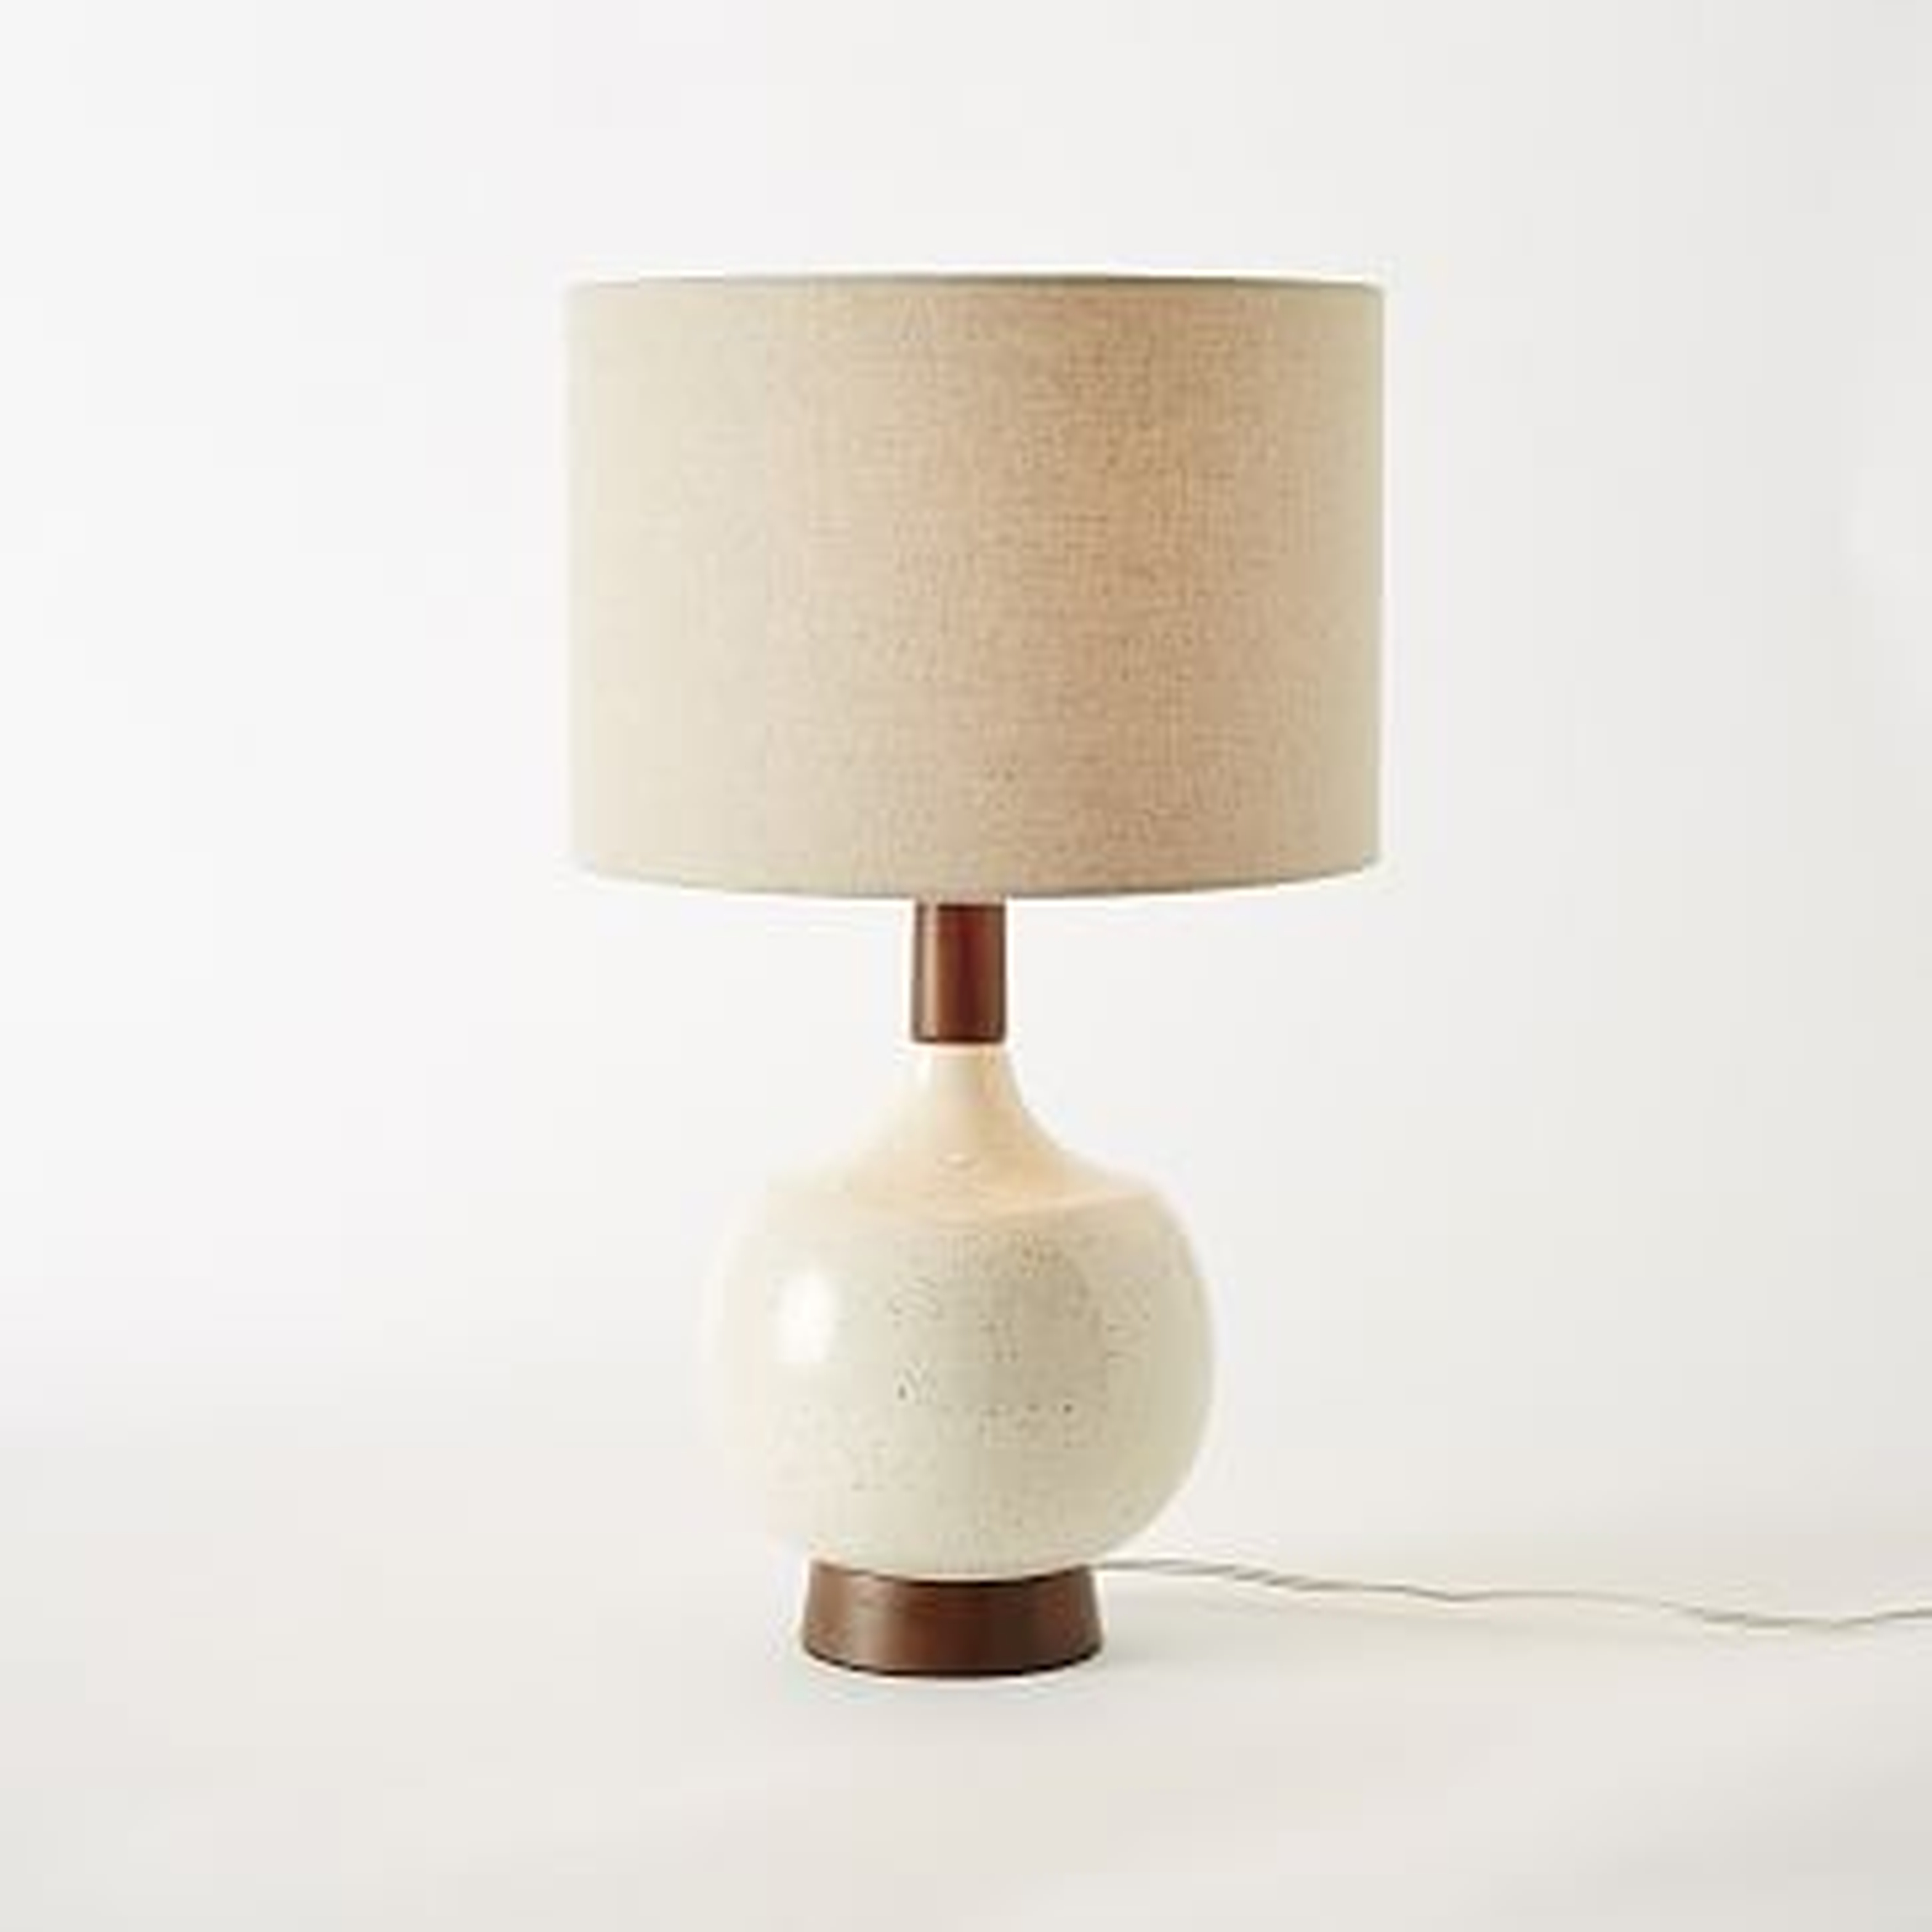 Modernist Table Lamp, Egg White/Natural, Set of 2 - West Elm